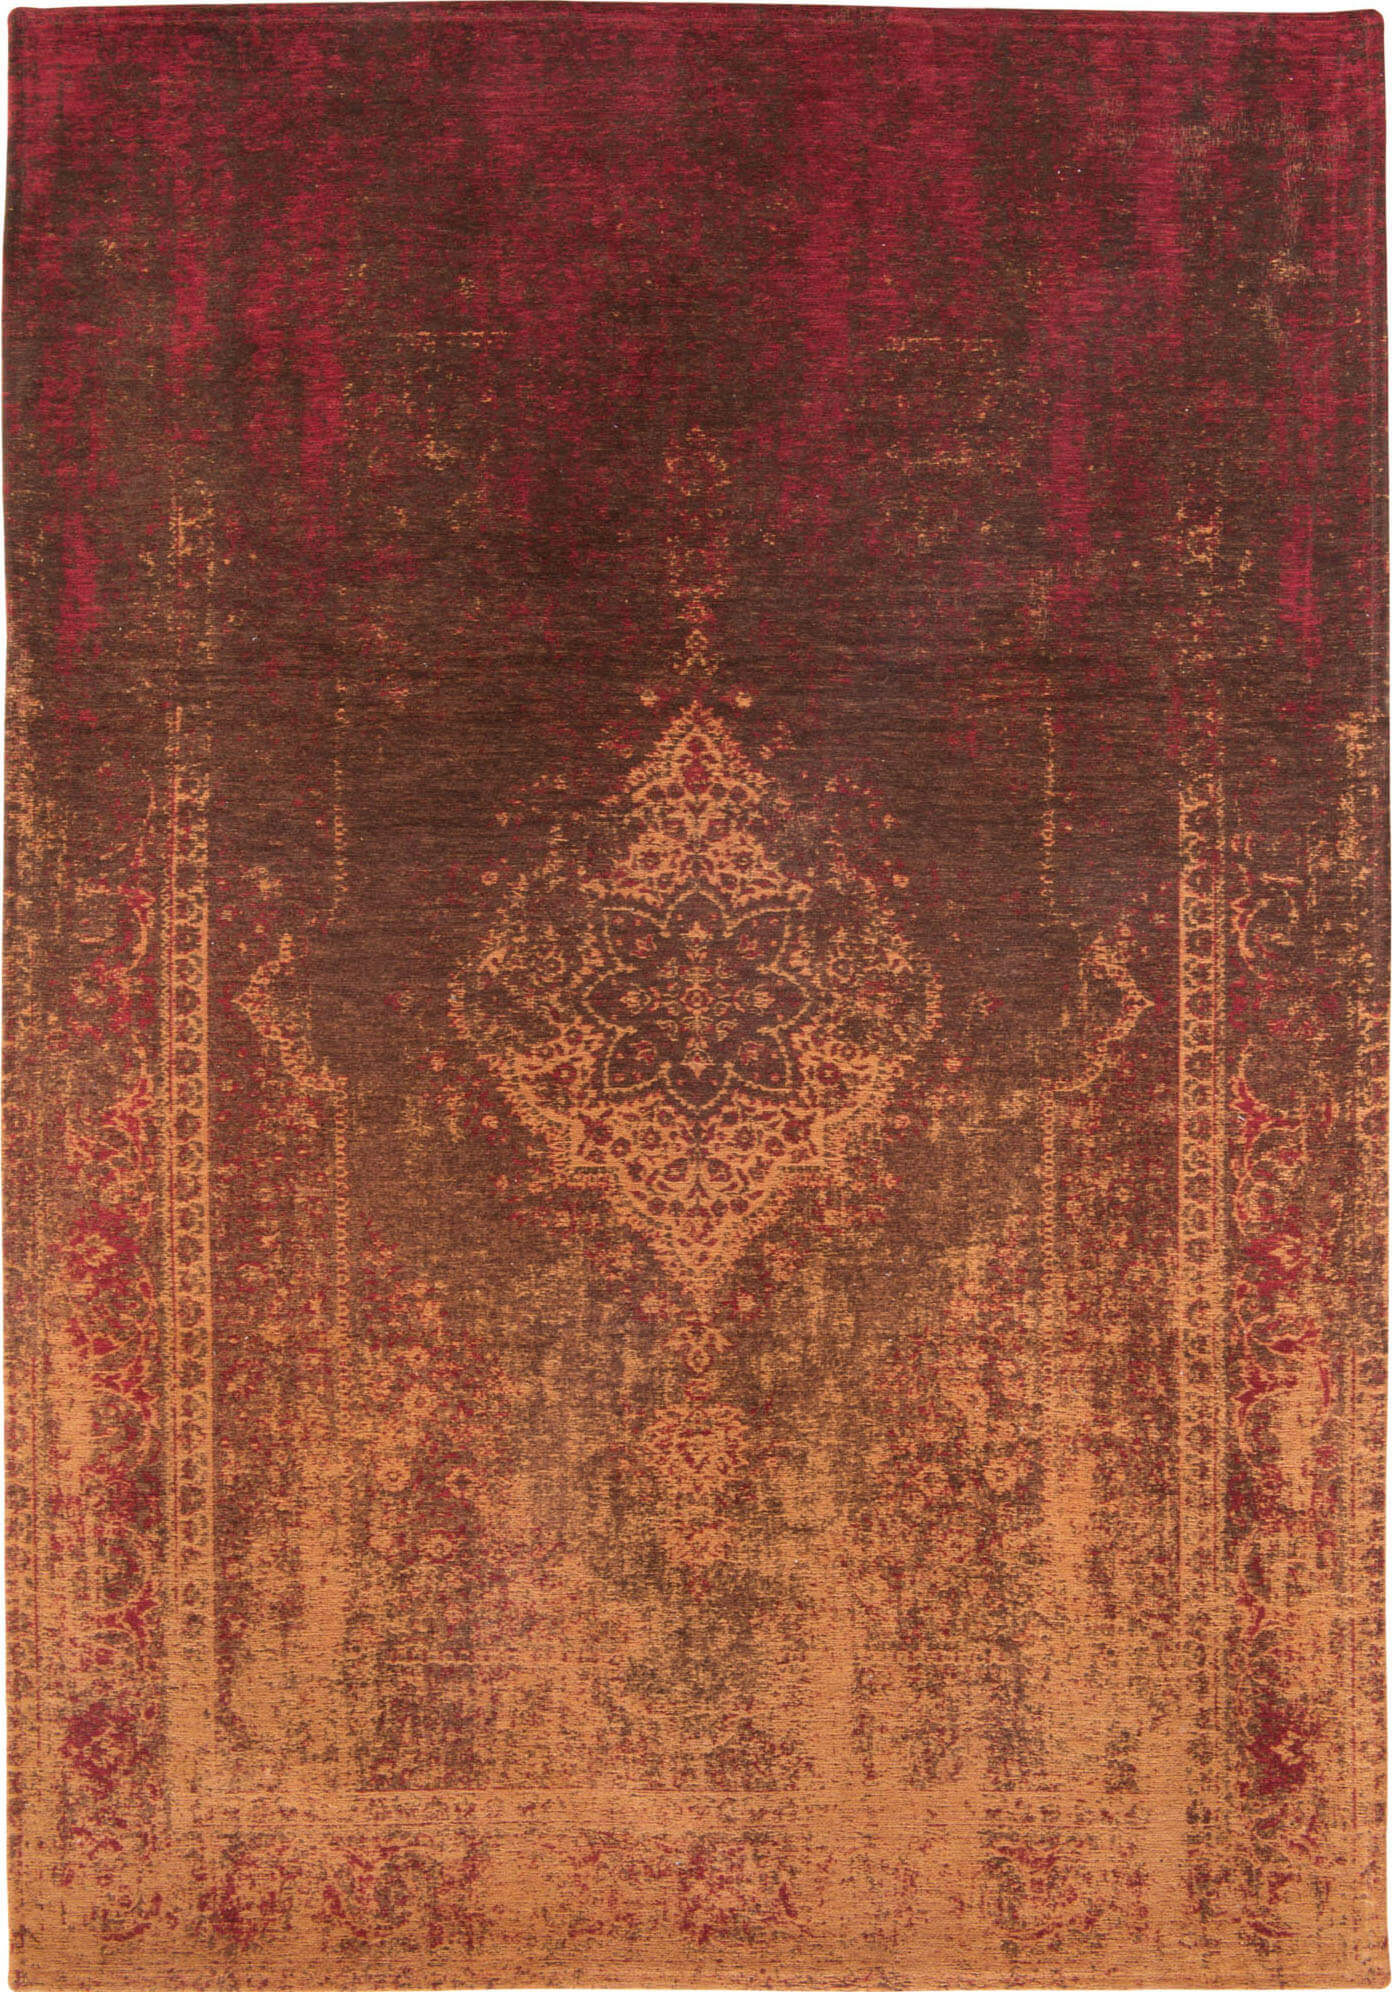 Persian Vintage Style Rug Mango Brown ☞ Size: 60 x 90 cm